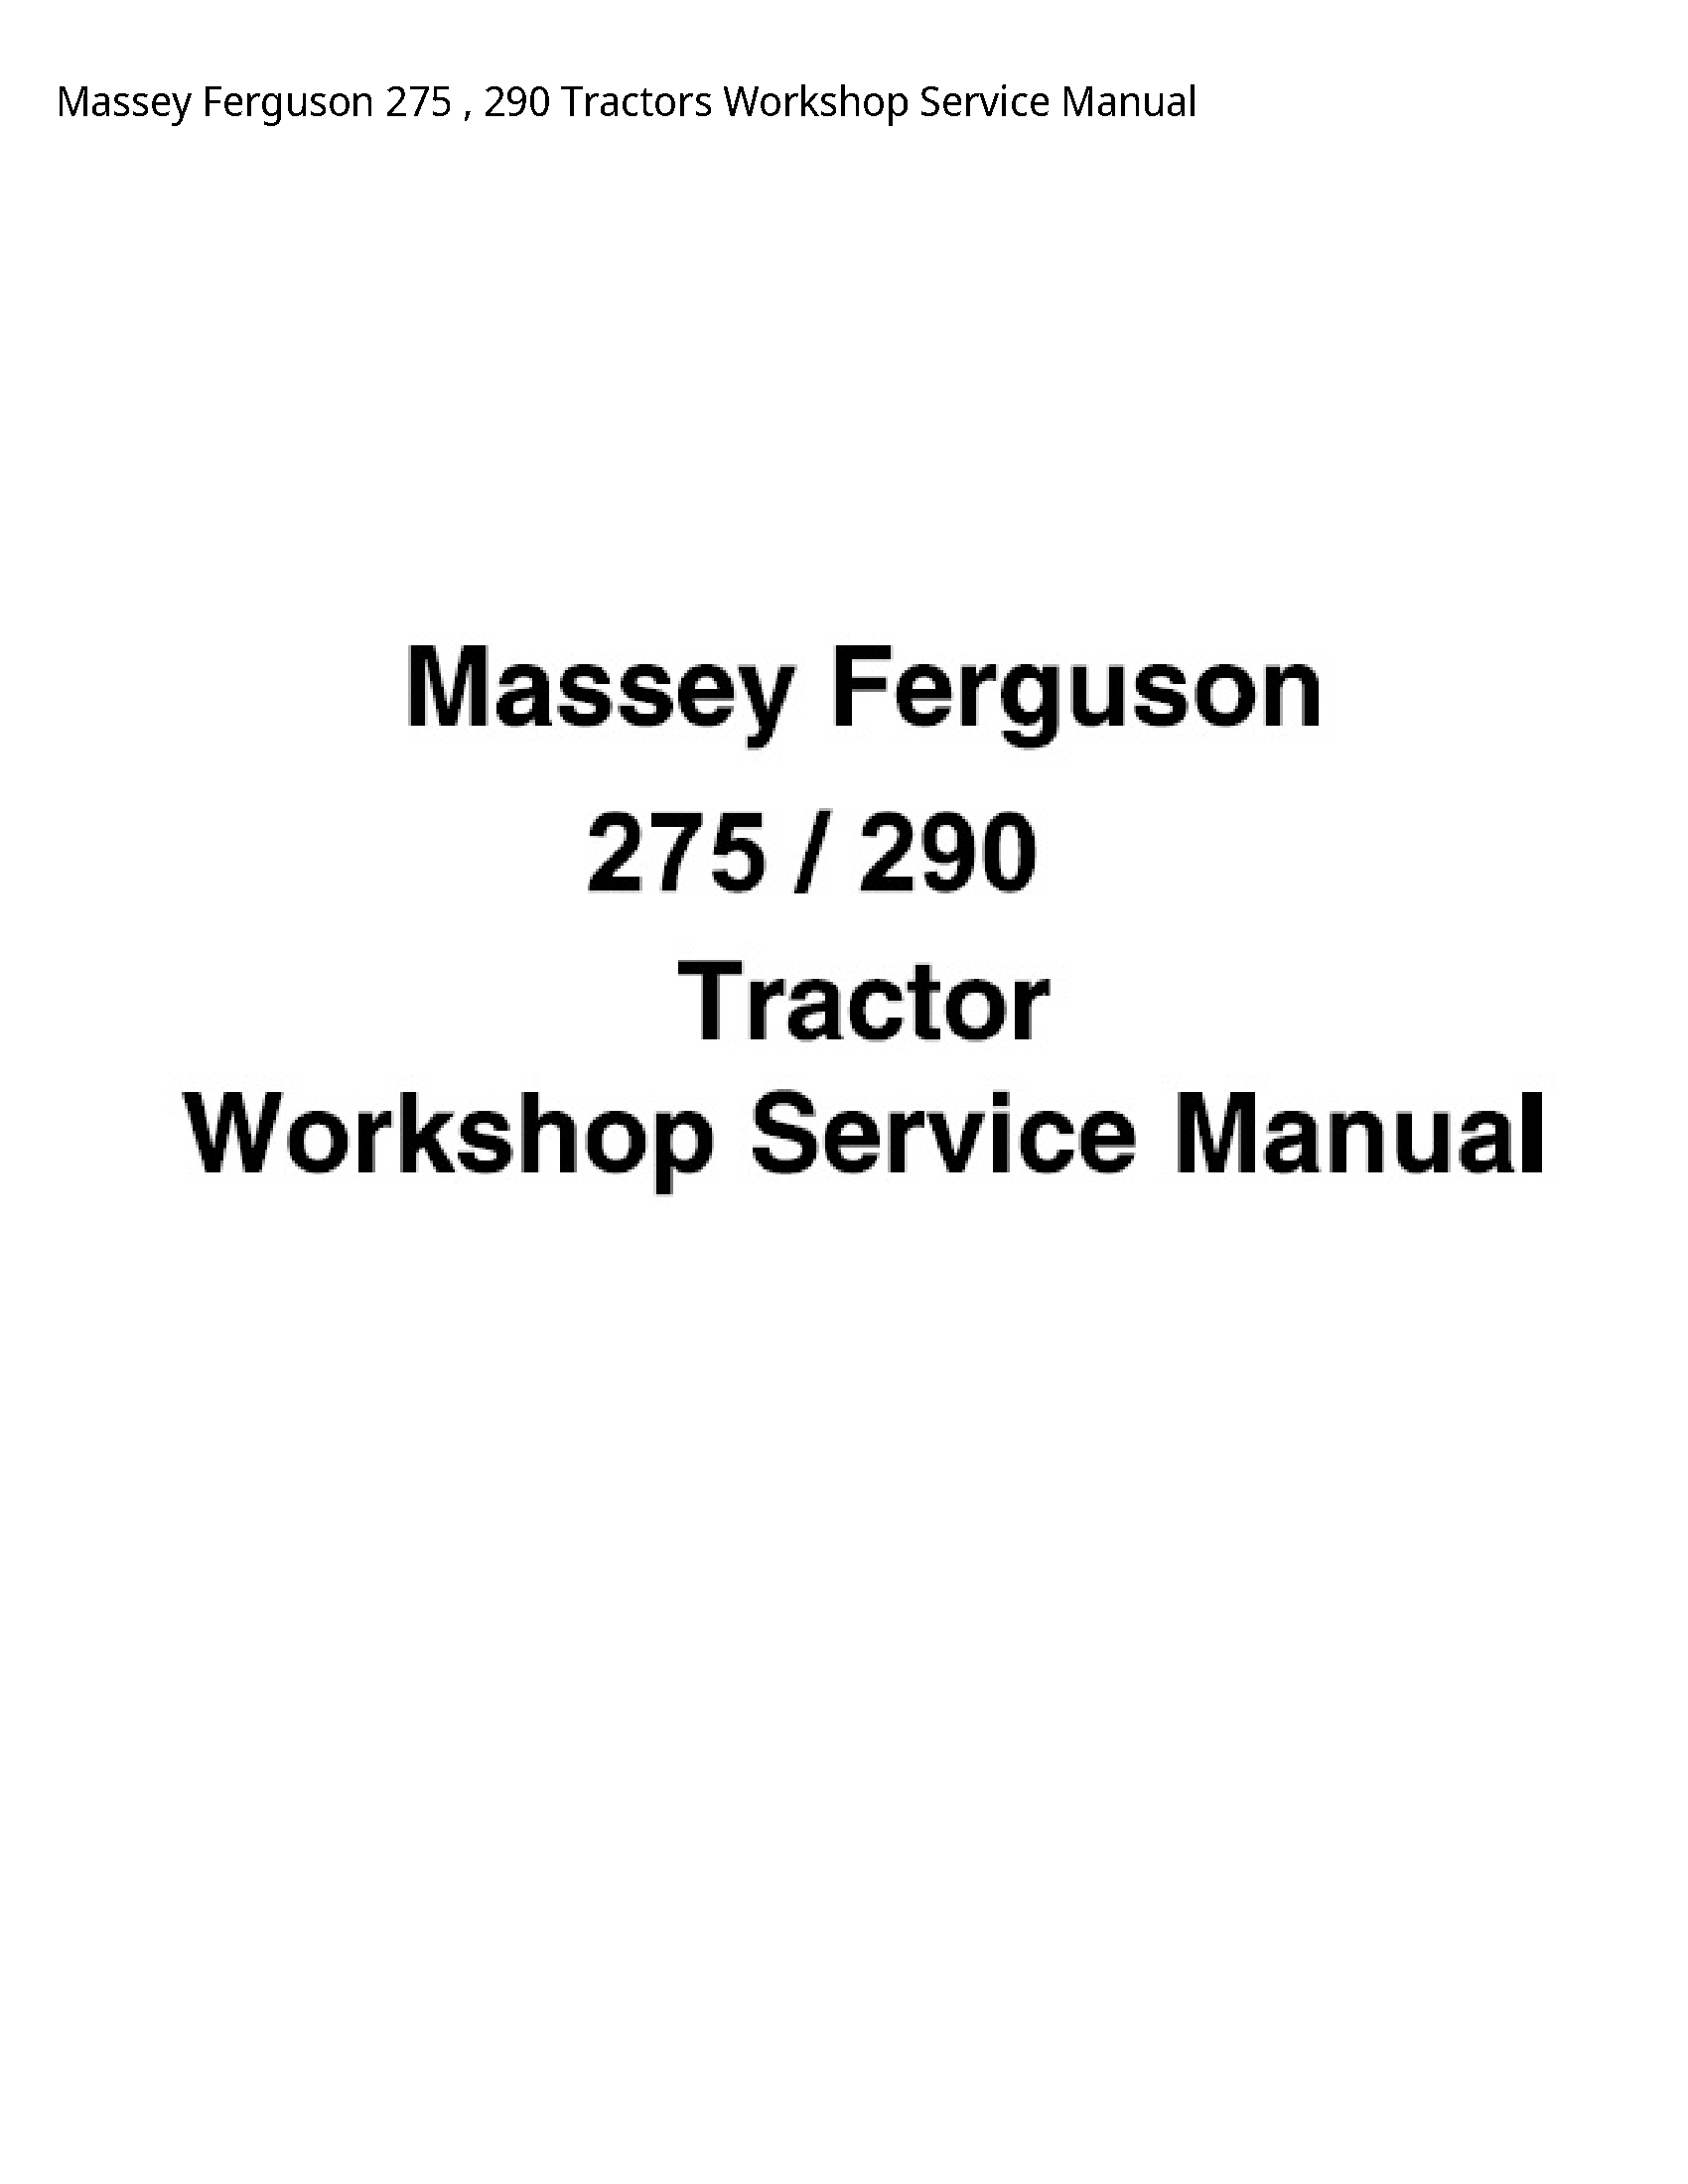 Massey Ferguson 275 Tractors Service manual